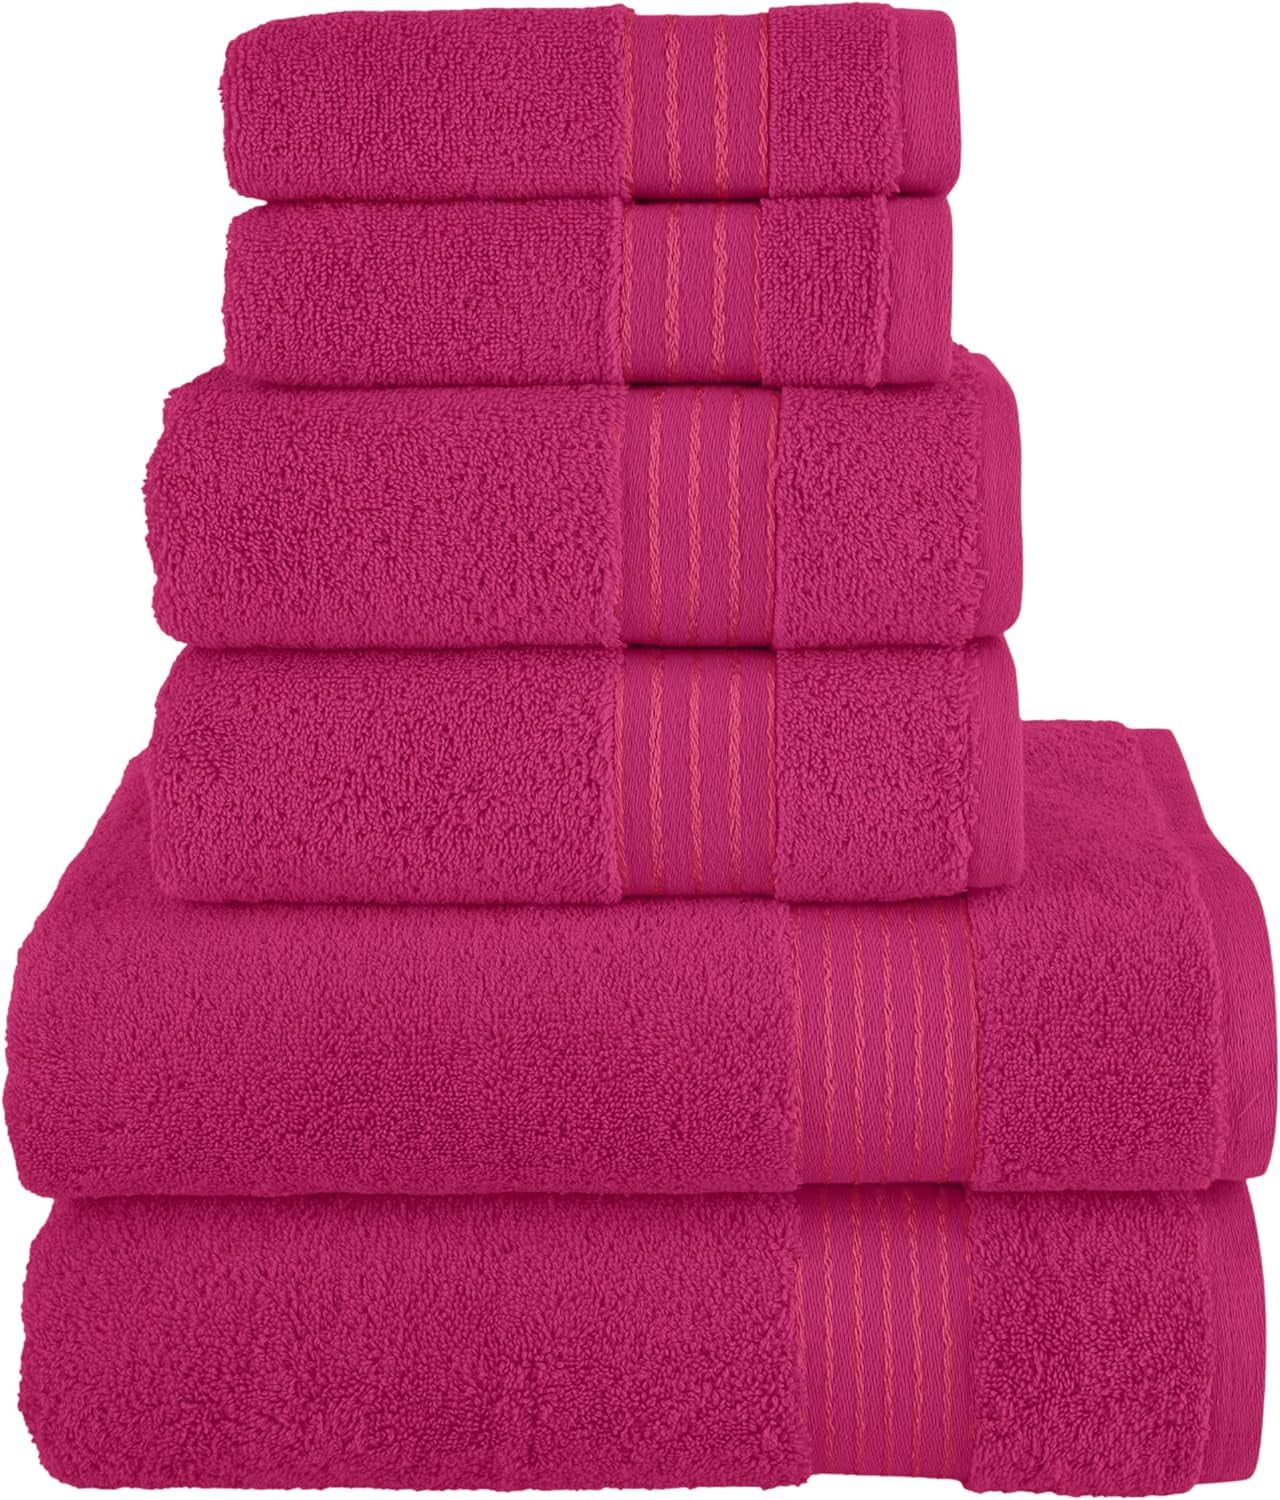 100% Cotton Luxury Bathroom Towels Set, Quick Dry, 2 Bath Towels, 2 Hand Towels, 2 Wash Cloths - ... | Walmart (US)